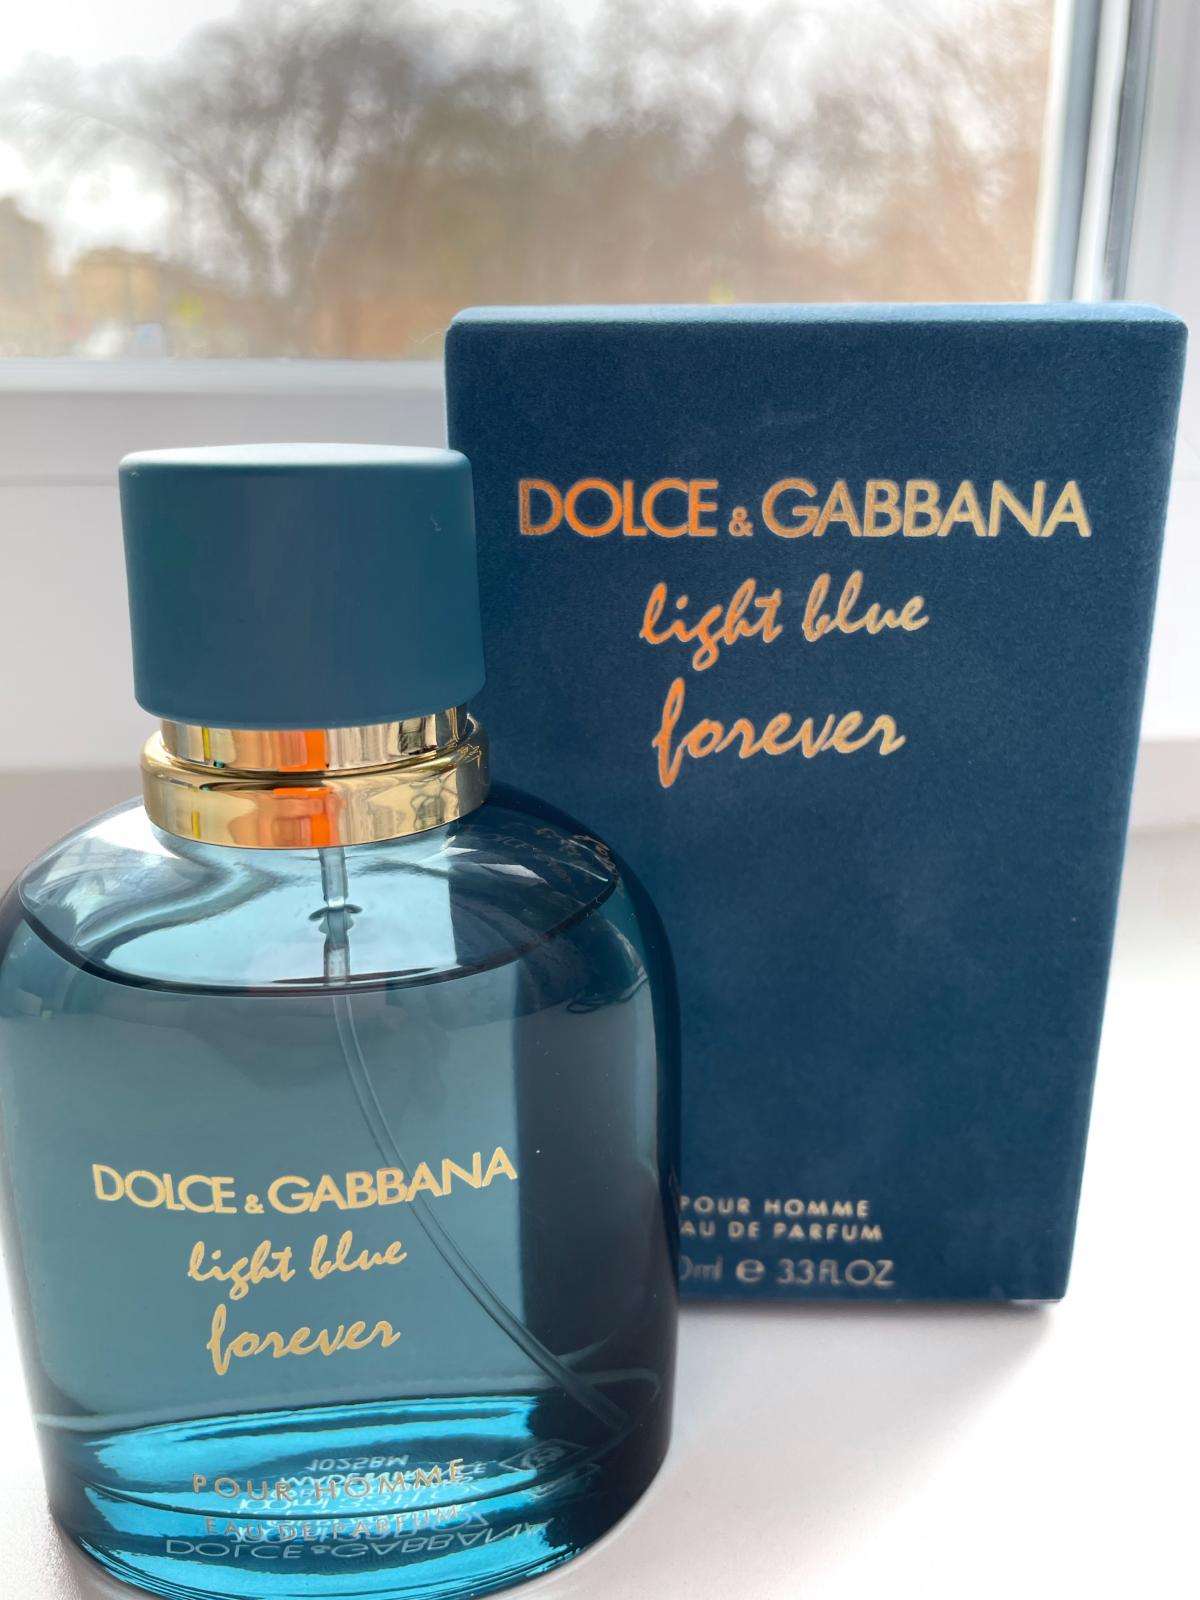 Light blue forever pour homme dolce gabbana. Dolce Gabbana Light Blue Forever pour homme. Dolce & Gabbana Light Blue Forever pour homme EDP, 100 ml. Лайт Блю Форевер Дольче Габбана 100 мл. Дольче Габбана Лайт Блю Форевер.